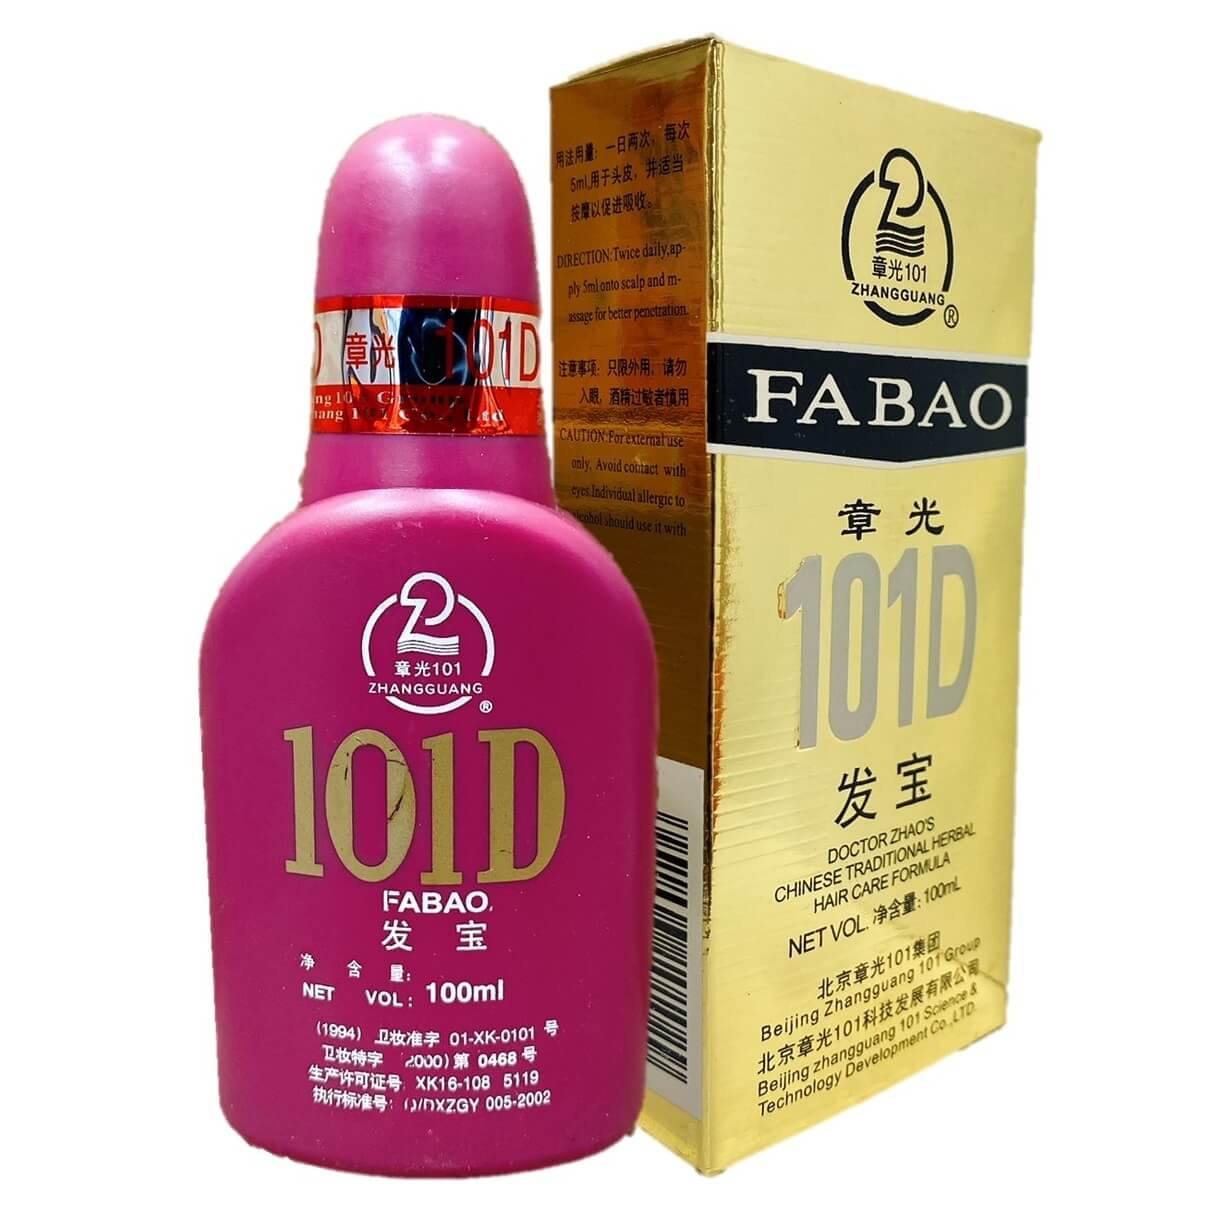 Zhang Guang 101D, Fabao Nurturing Hair Formula (100mL) - Buy at New Green Nutrition